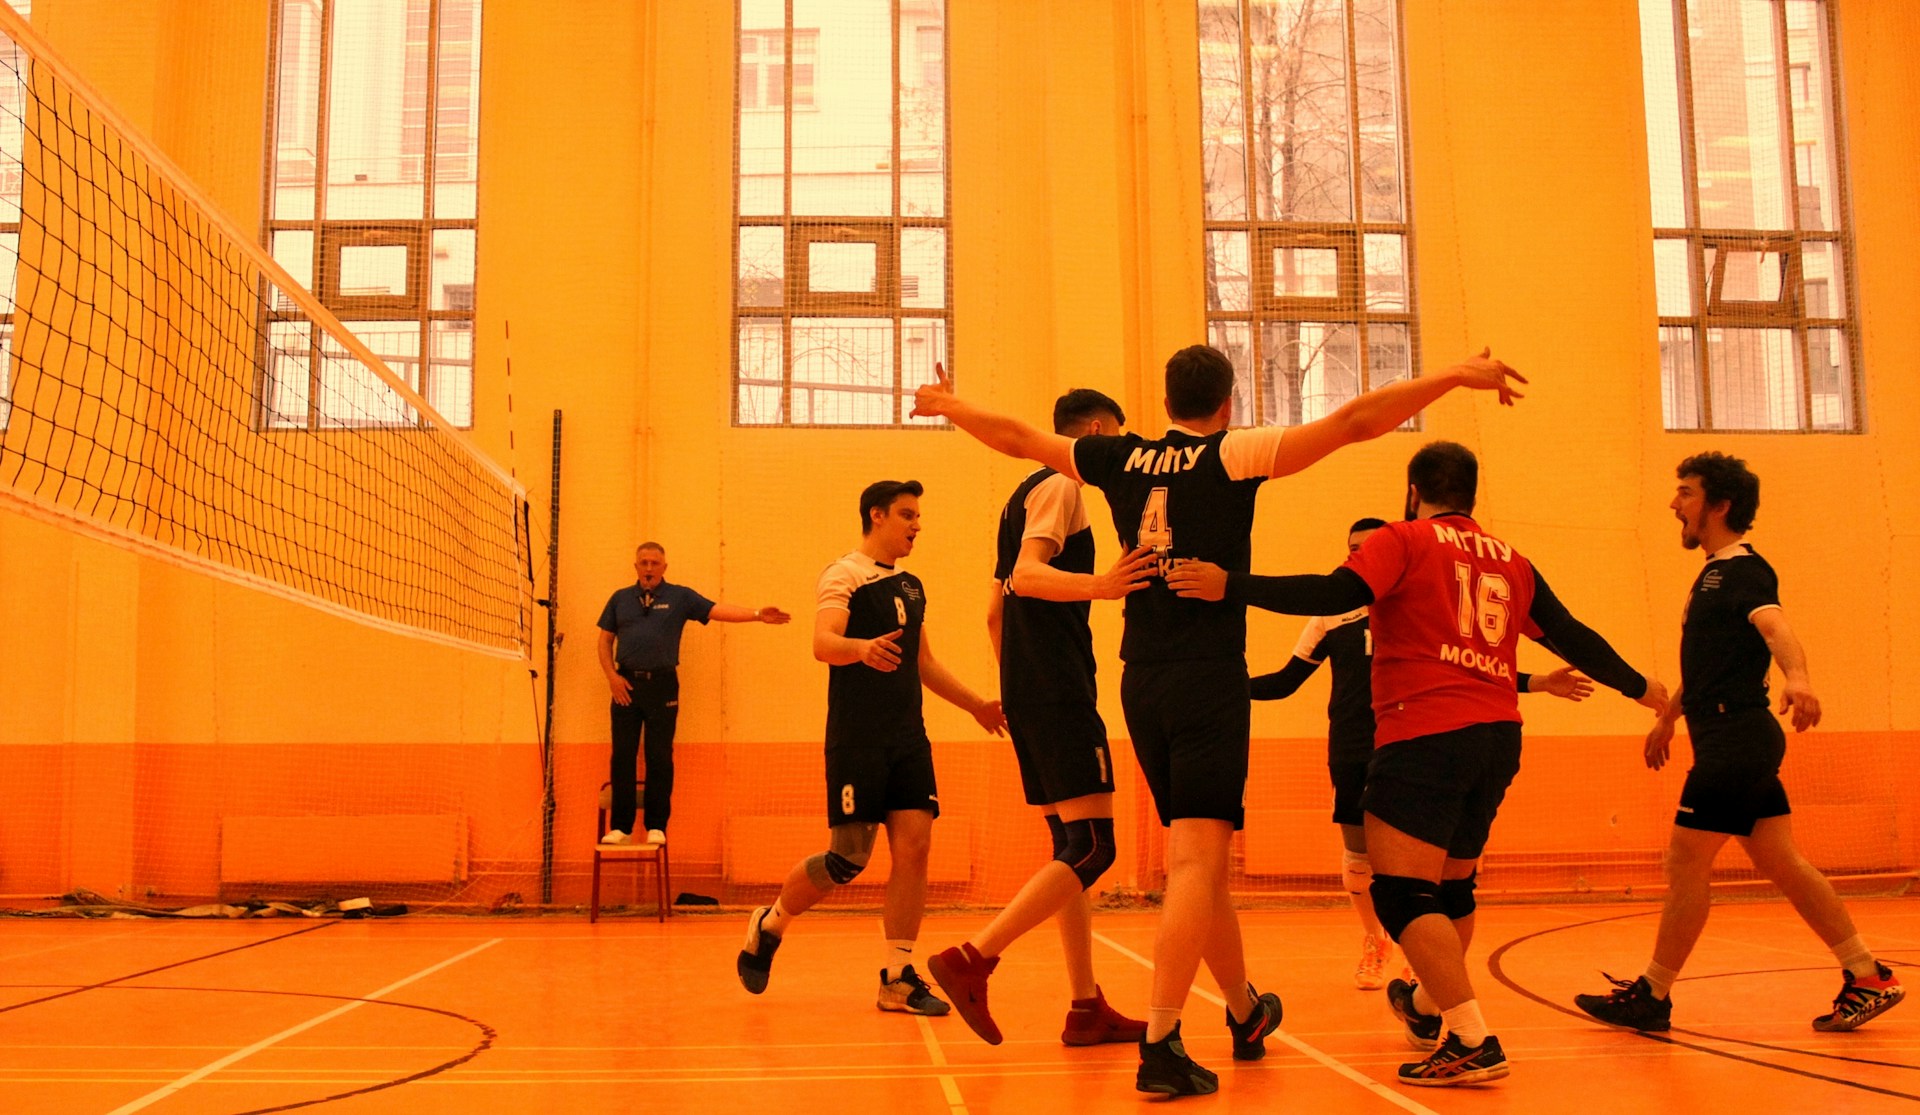 group of men playing basketball